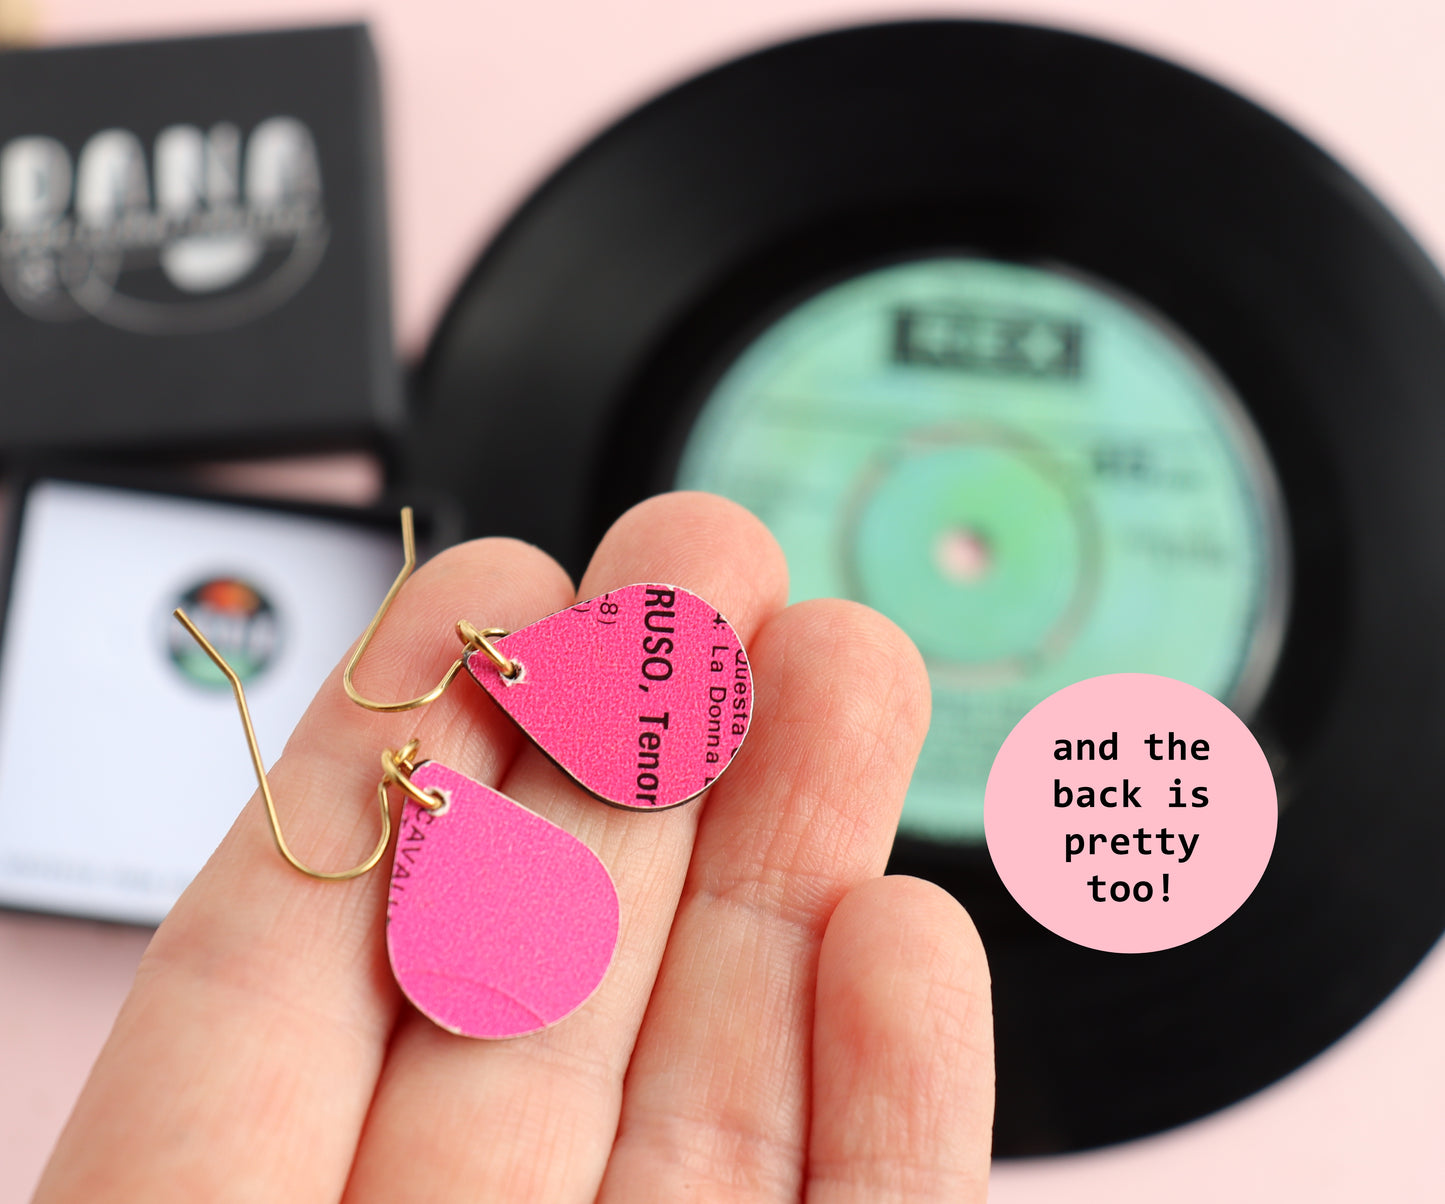 Small repurposed vinyl record teardrop earrings in fab fuchsia pink